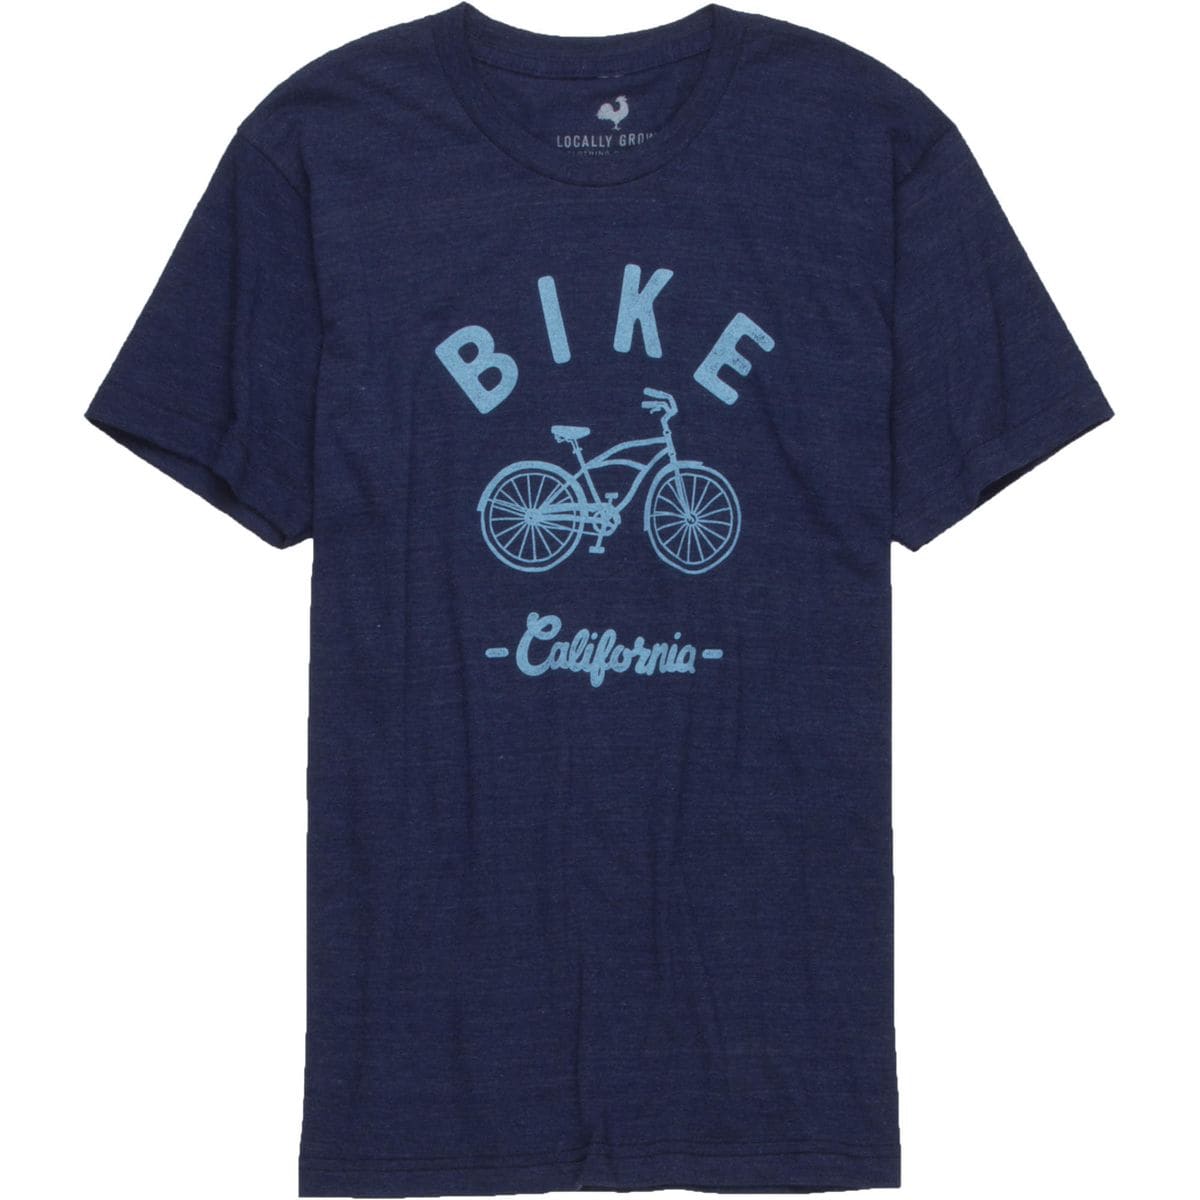 Locally Grown Bike Cruiser California Tri-Blend Vintage T-Shirt - Short-Sleeve - Men's Vintage Navy/Light Blue, S